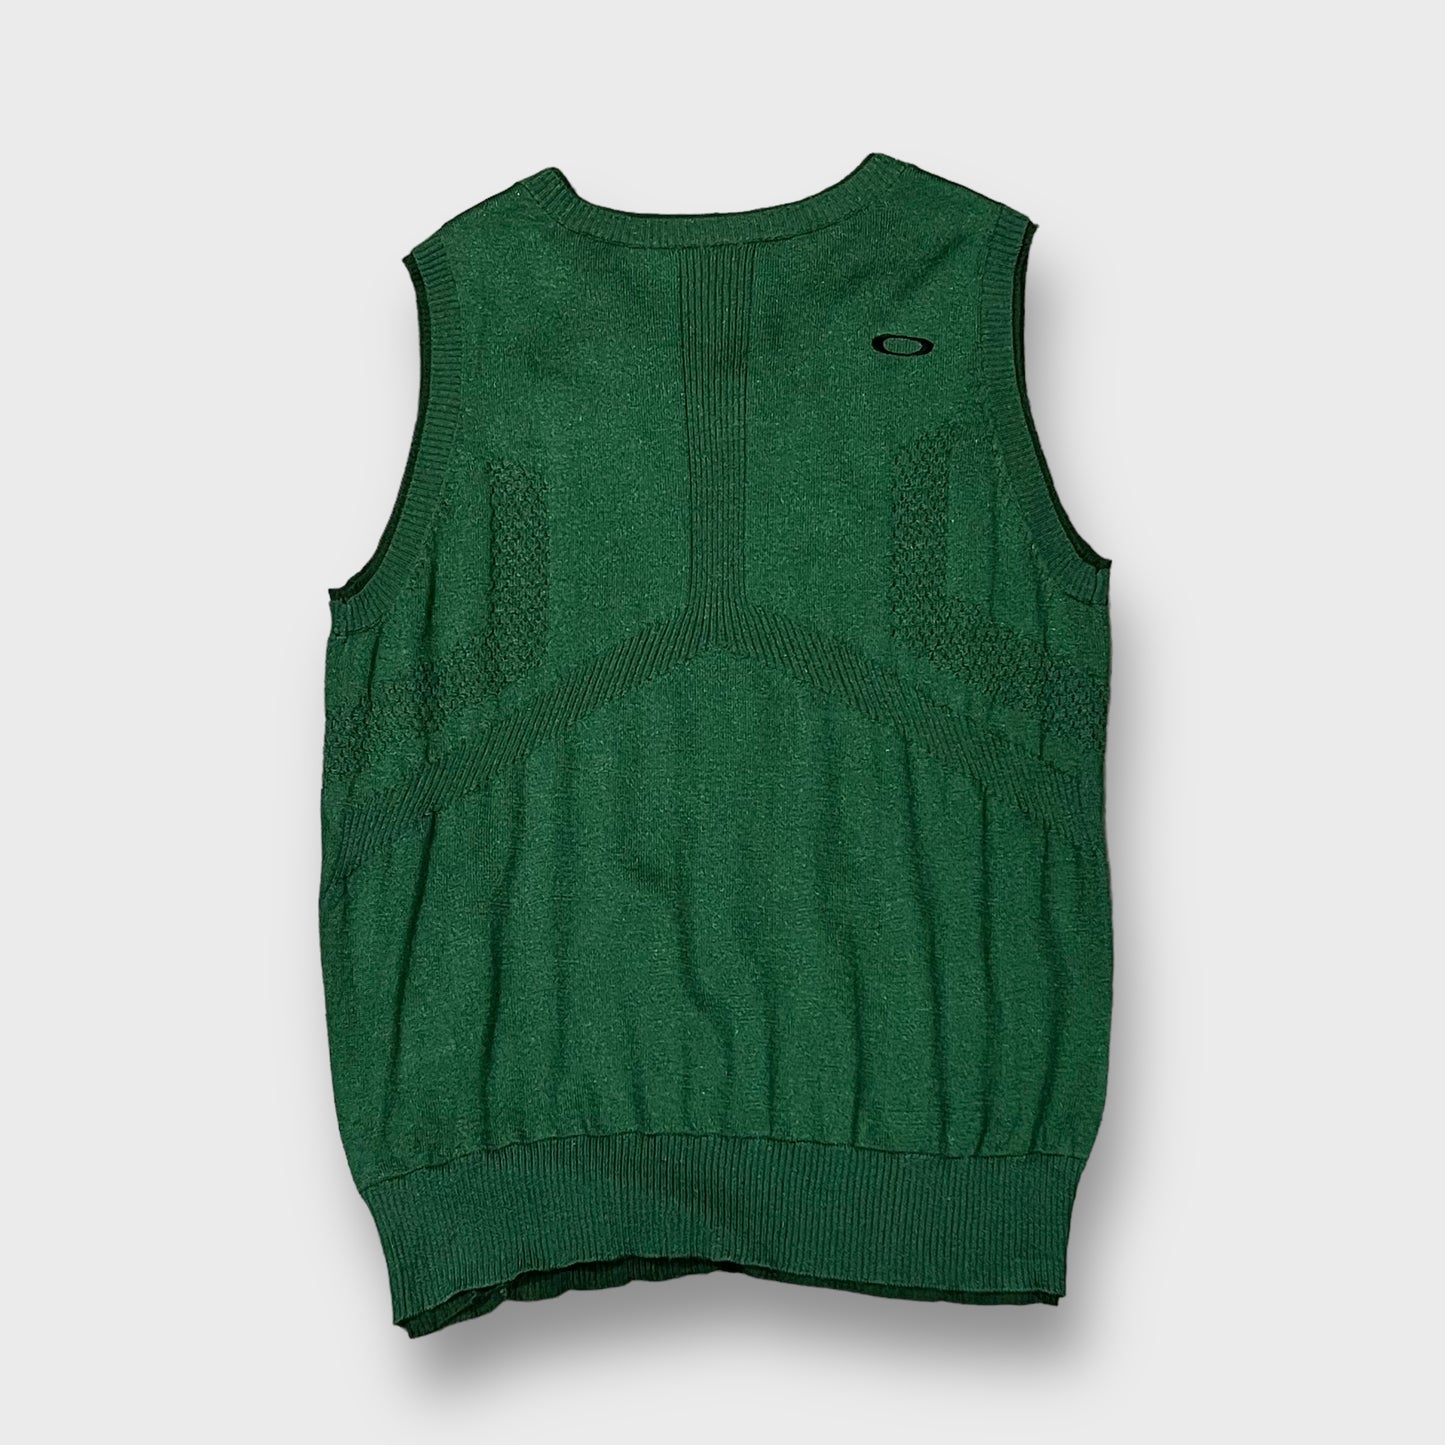 00’s “OAKLEY” knit vest